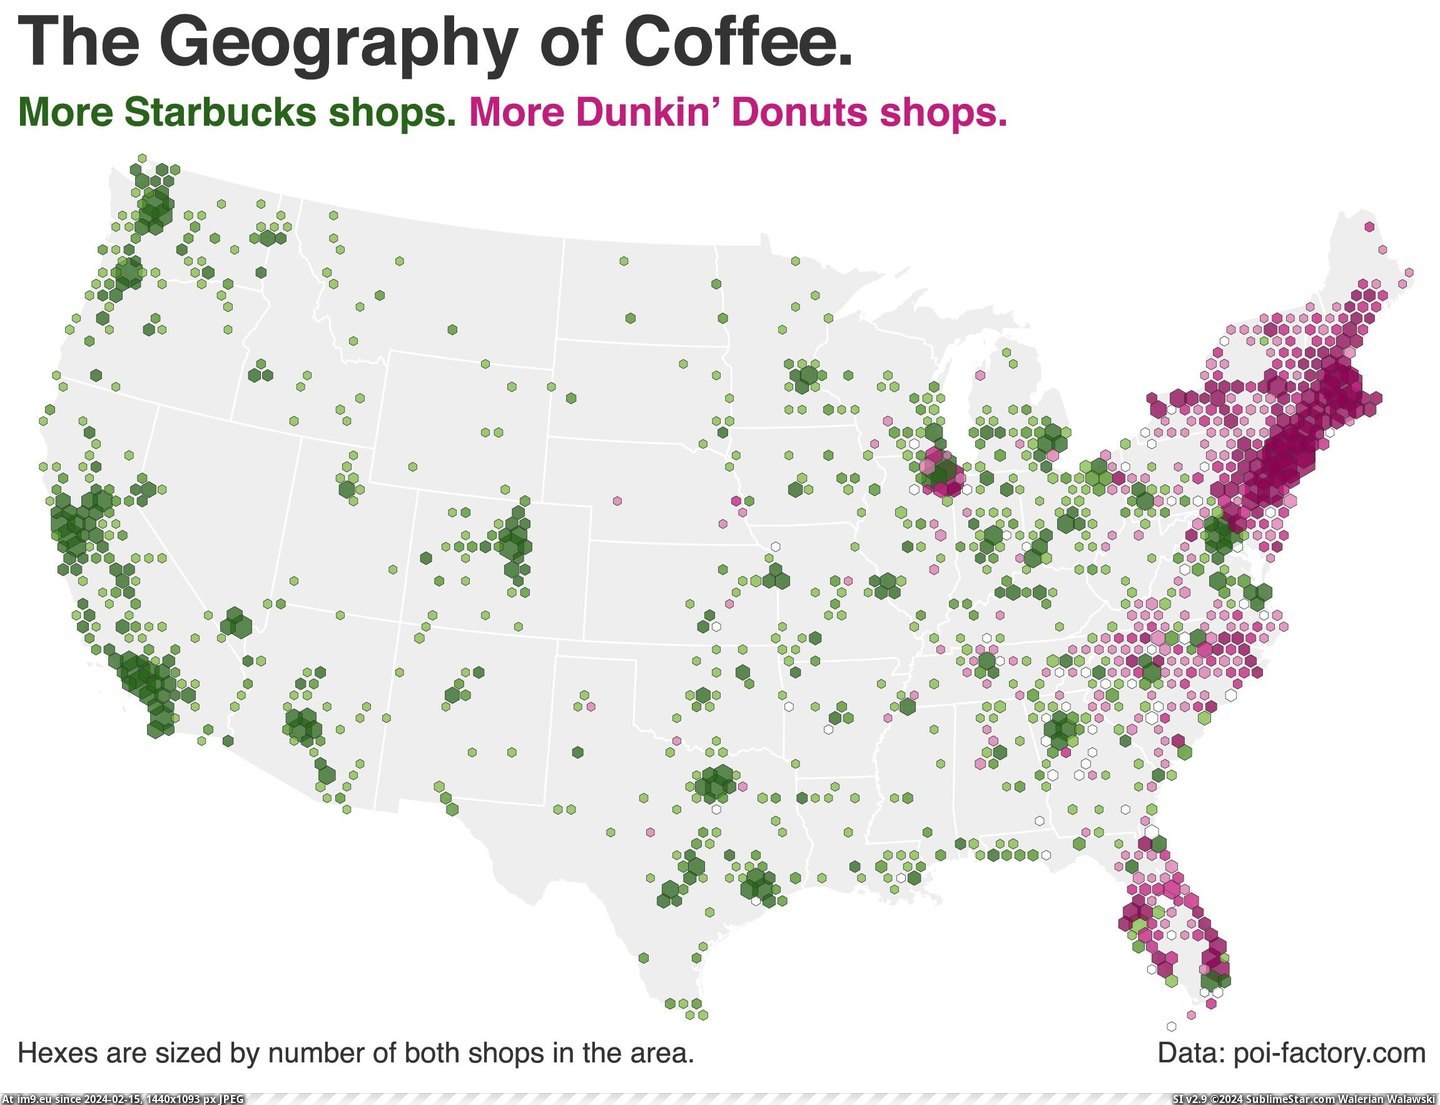 #Coffee #Shop #Geography #Dunkin #Donuts #Starbucks [Dataisbeautiful] Coffee shop geography: Starbucks vs. Dunkin' Donuts Pic. (Bild von album My r/DATAISBEAUTIFUL favs))